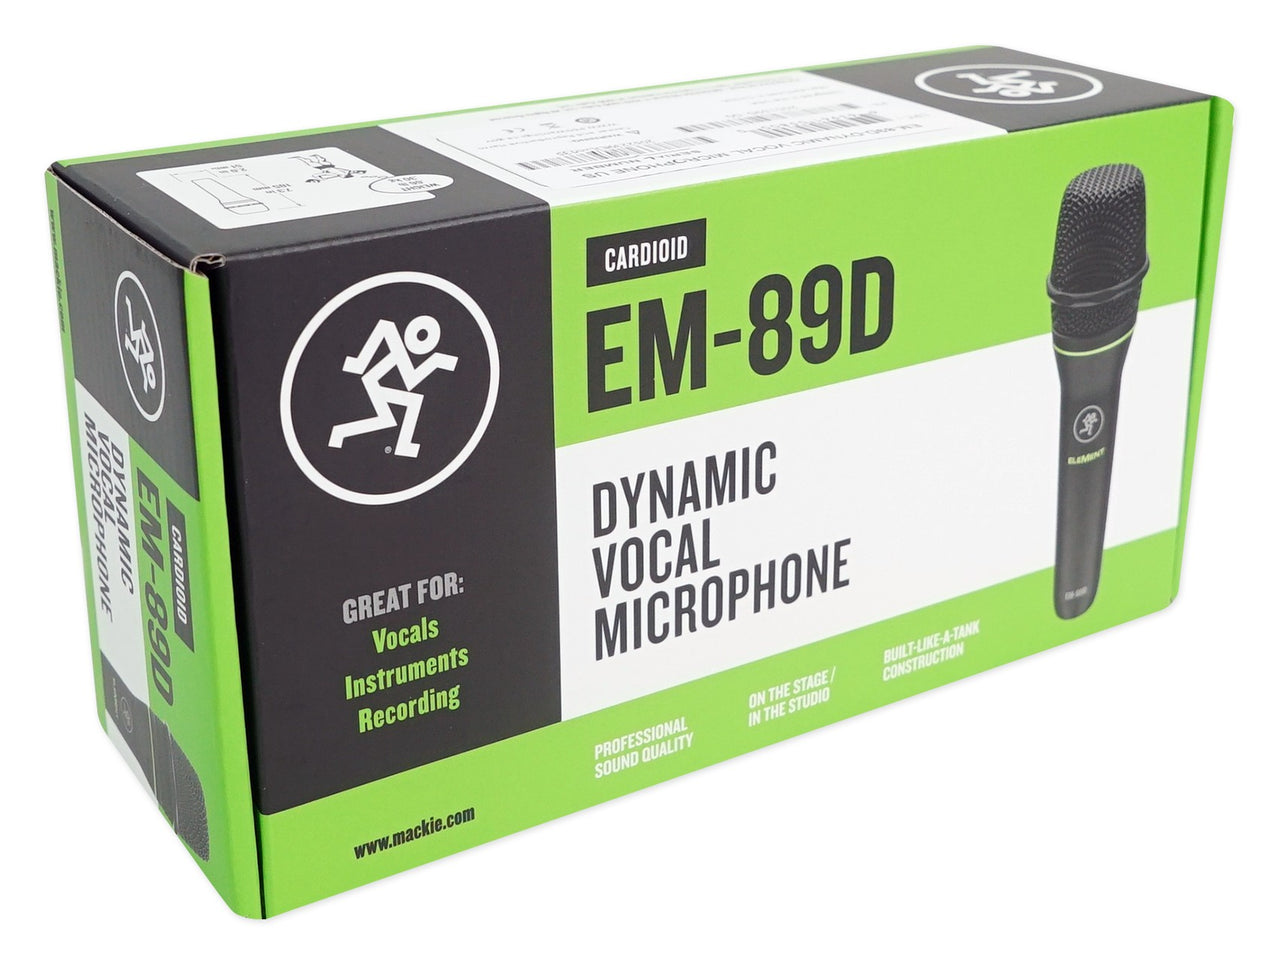 Mackie EleMent Series, Dynamic Vocal Microphone (EM-89D)